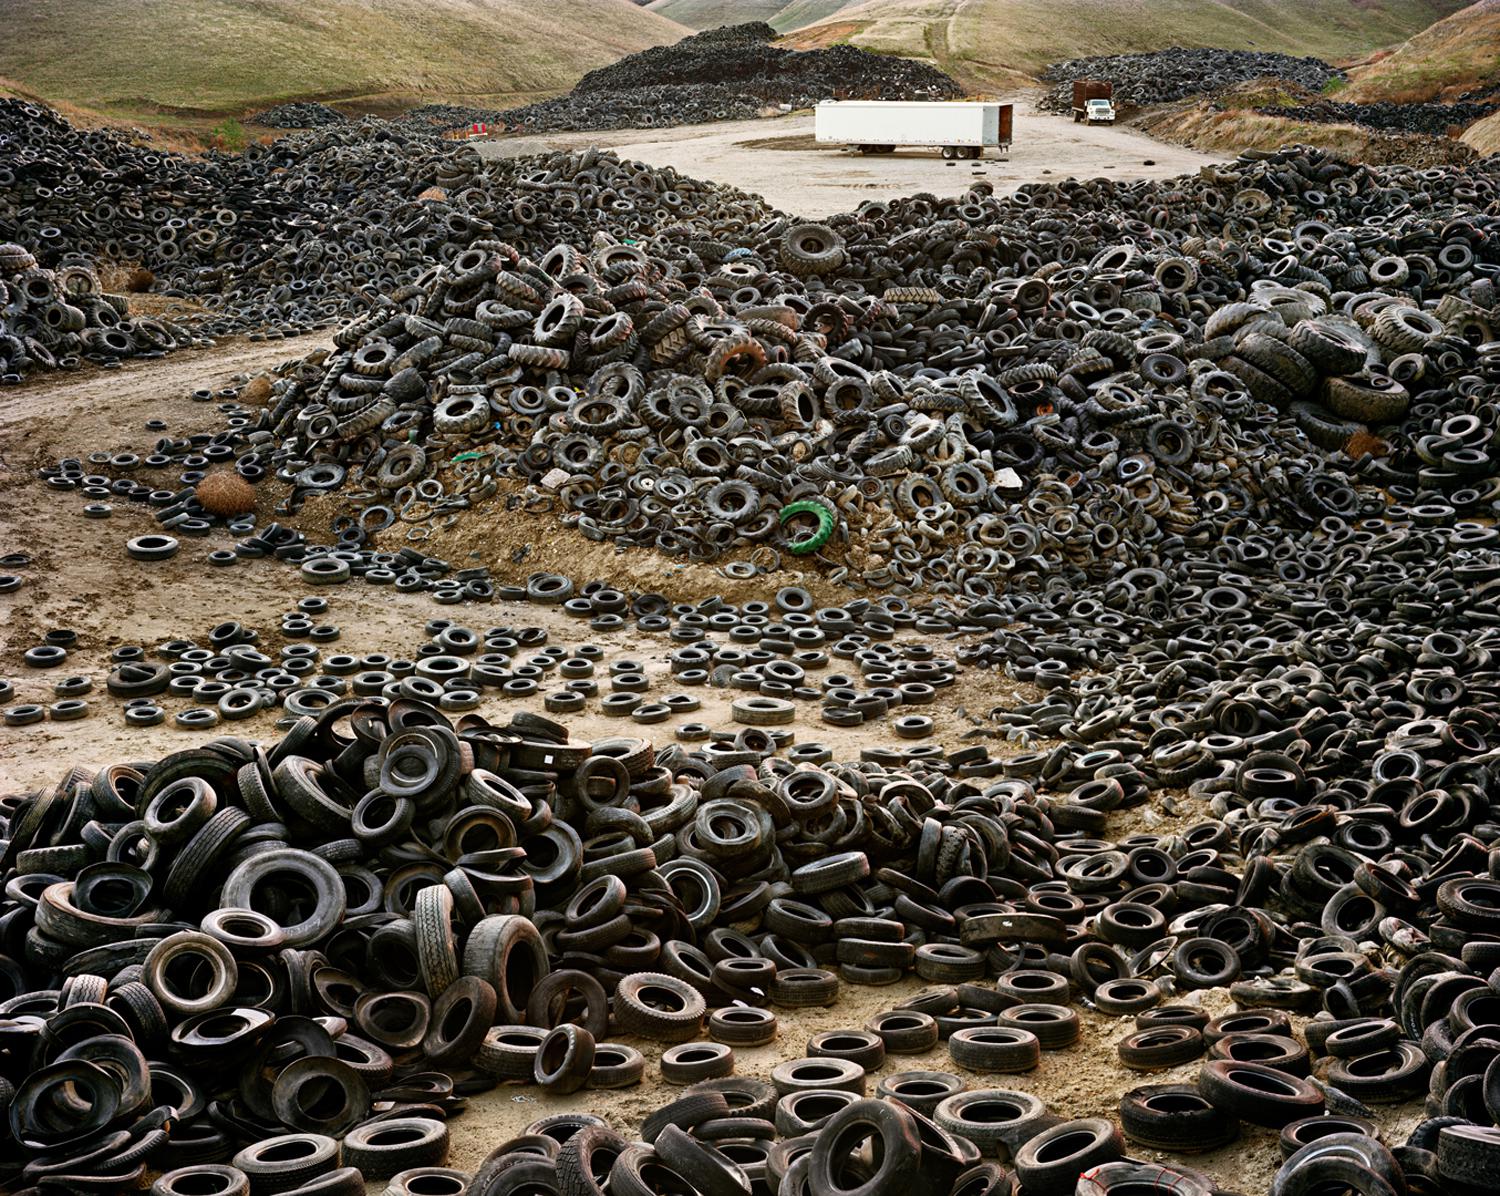 Photograph by Edward Burtynsky. Multiple piles of tires.